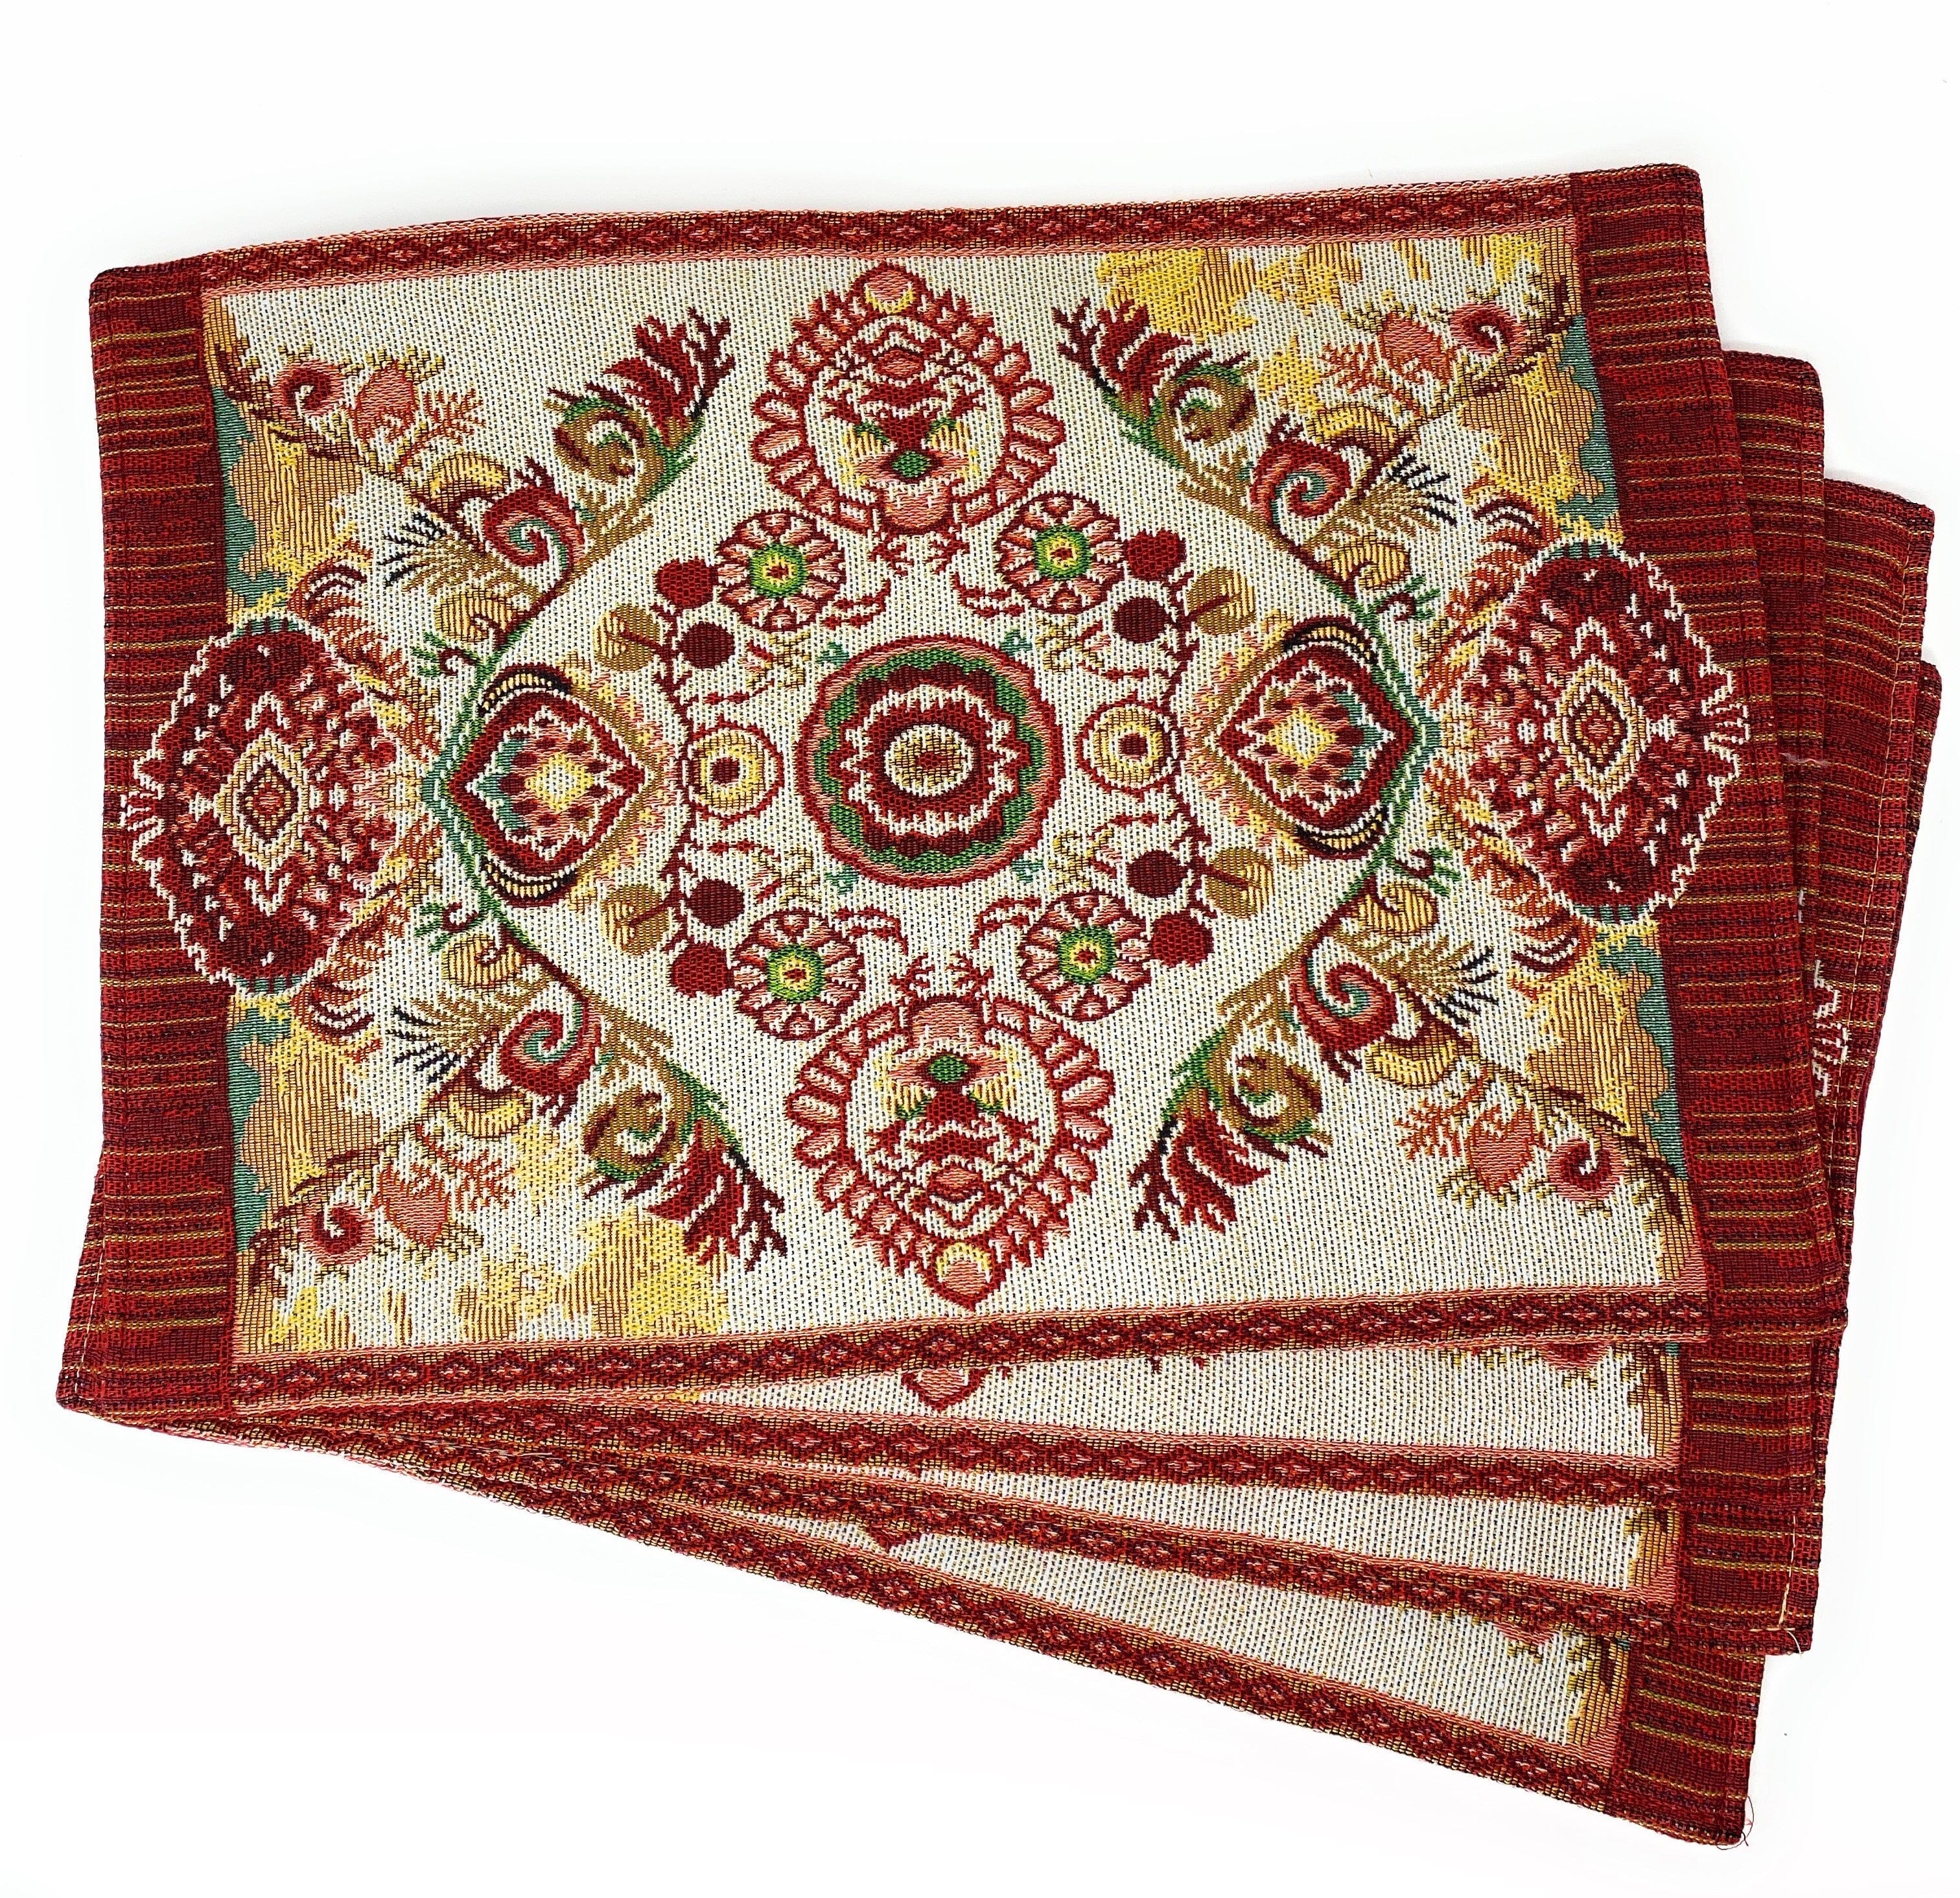 Tache Elegant Burgundy Ornate Paisley Woven Tapestry Placemat Set (18194) - Tache Home Fashion